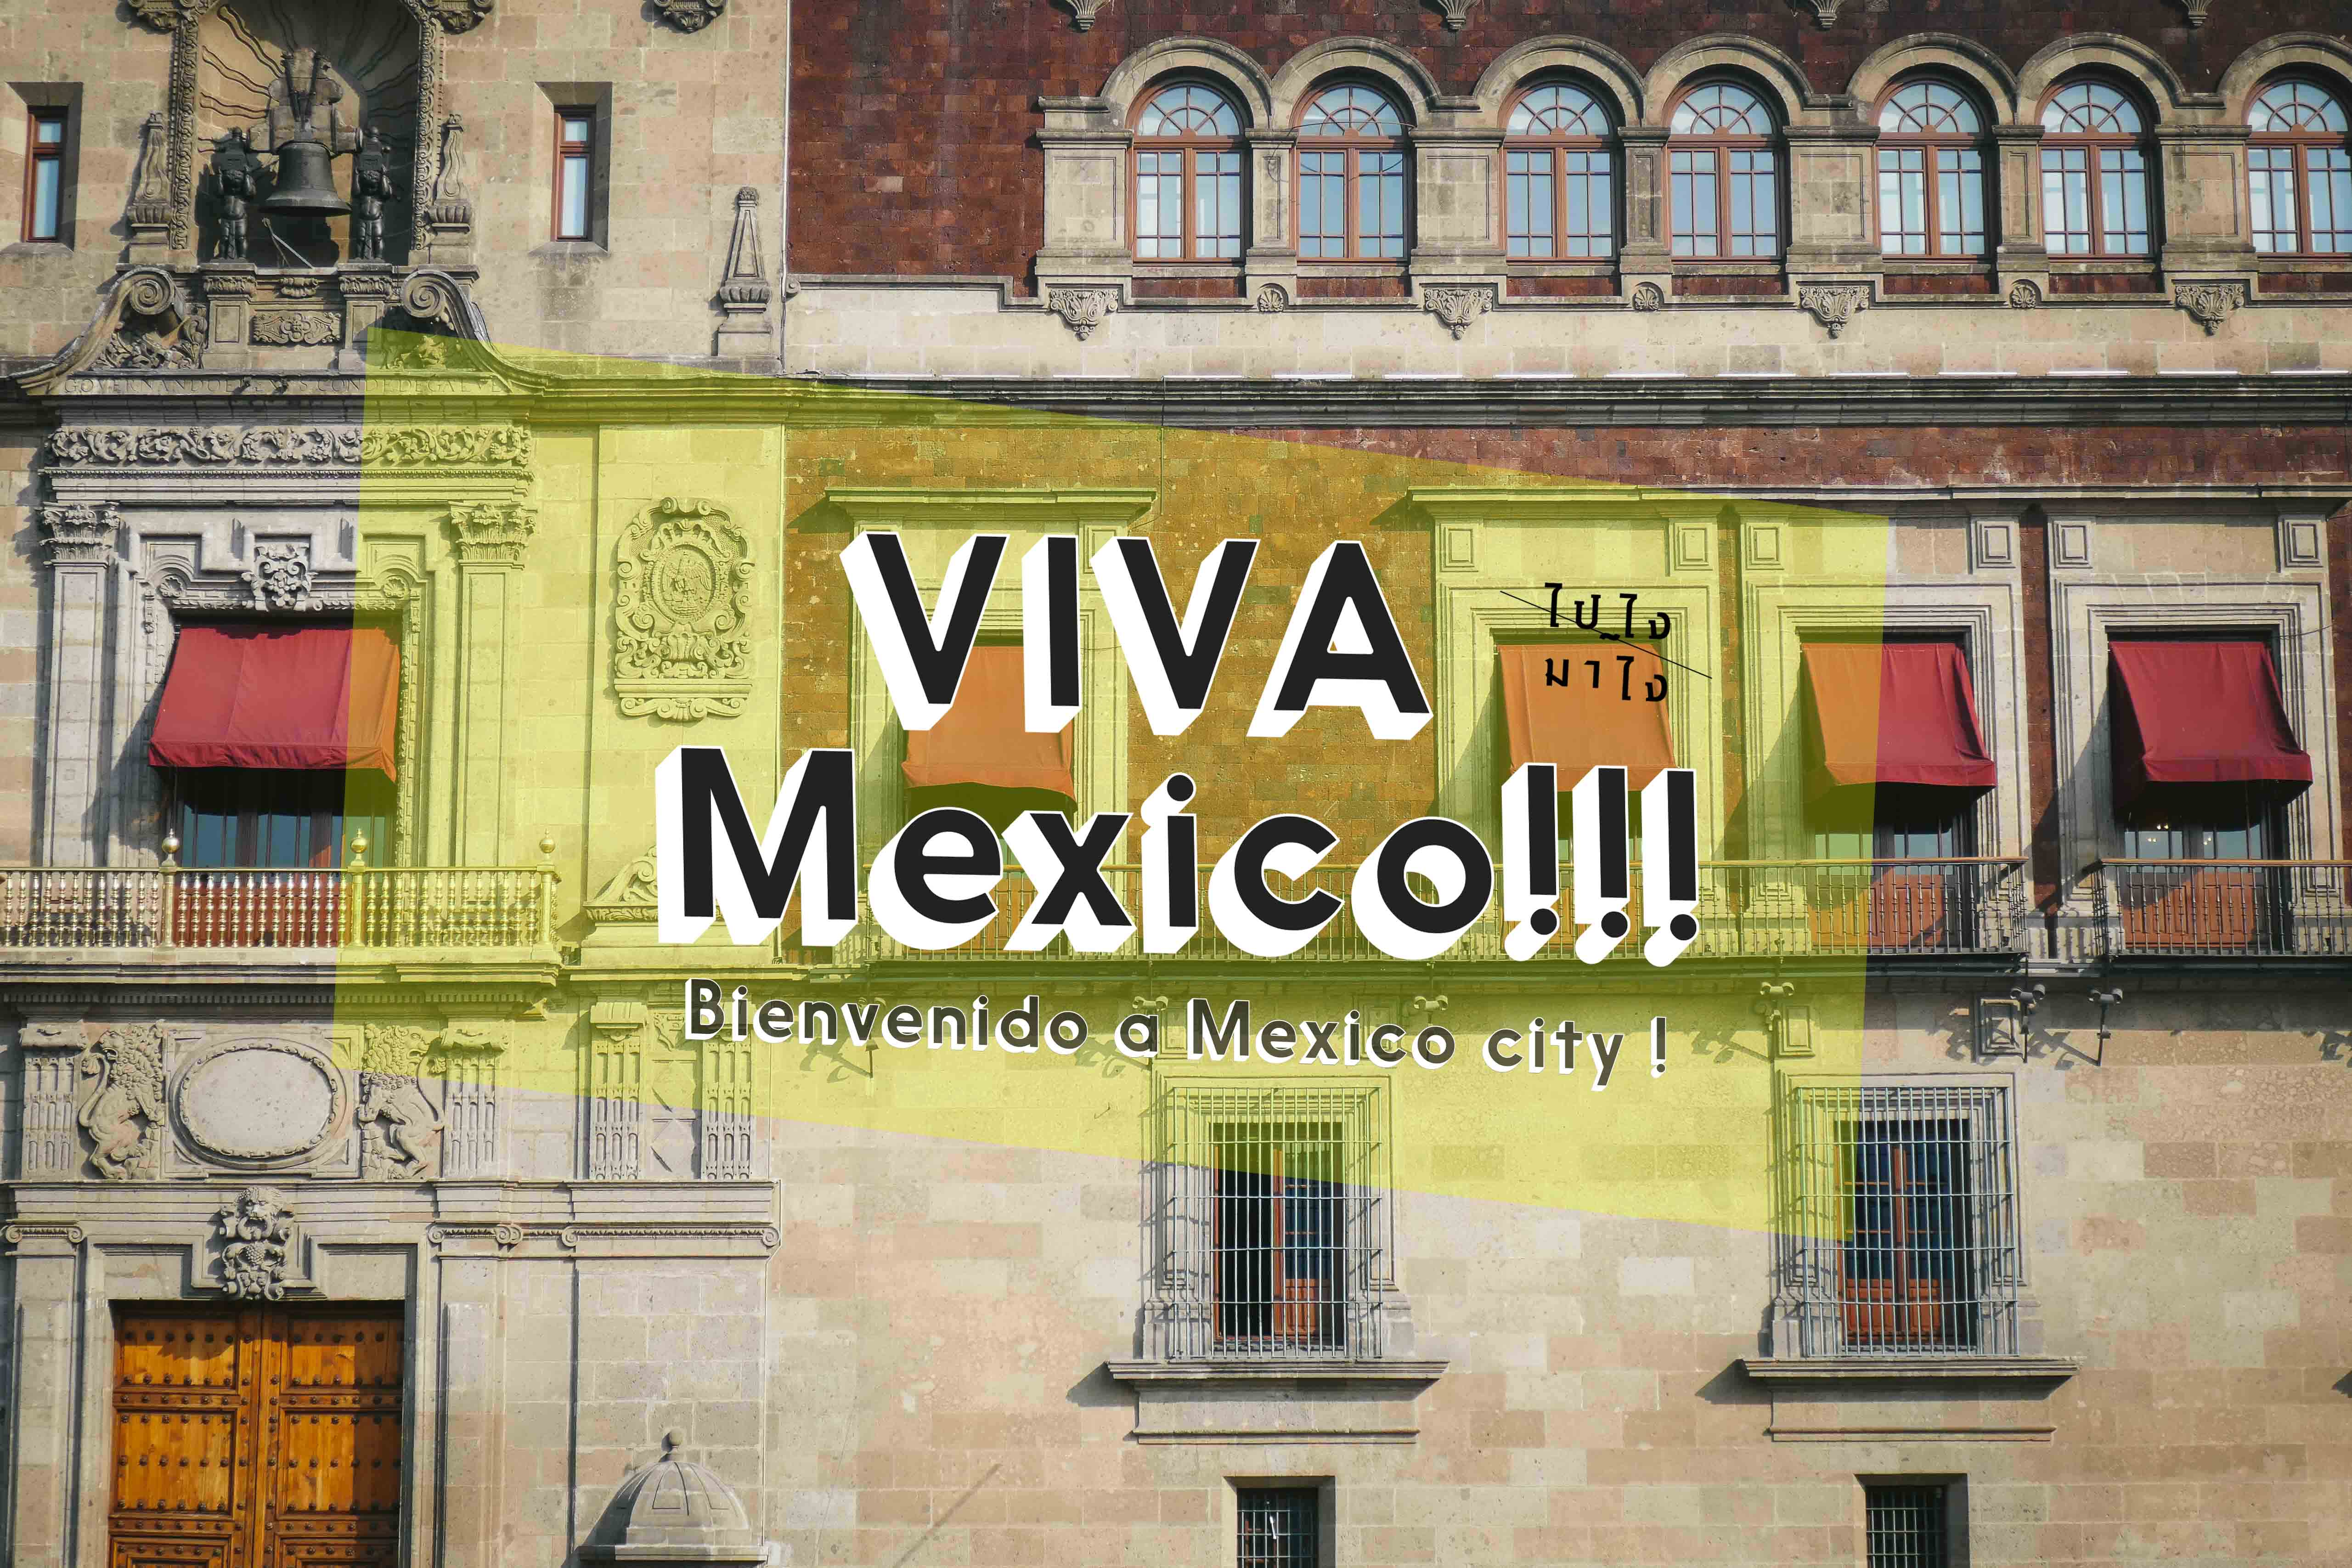 VIVA Mexico!